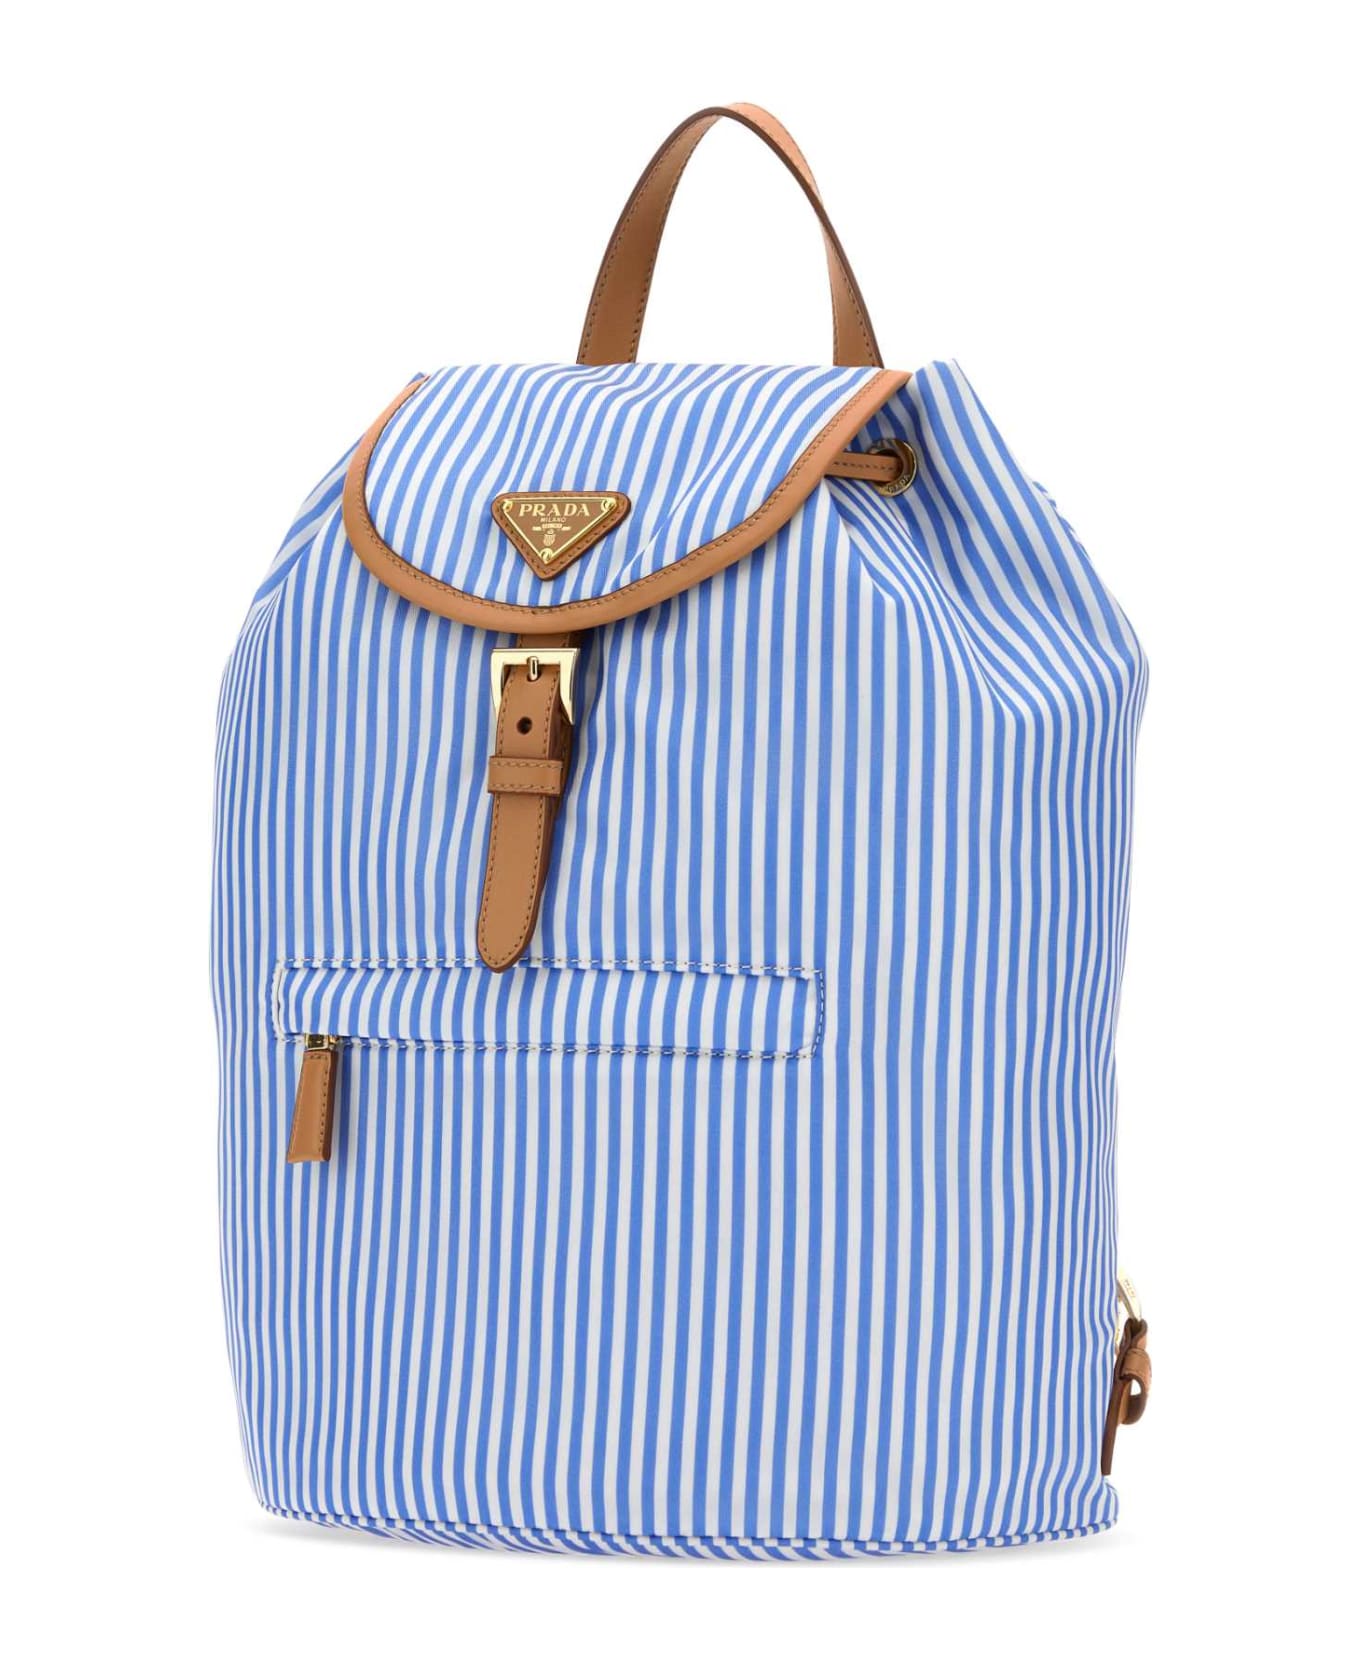 Prada Printed Re-nylon Backpack - CELESTENATURA